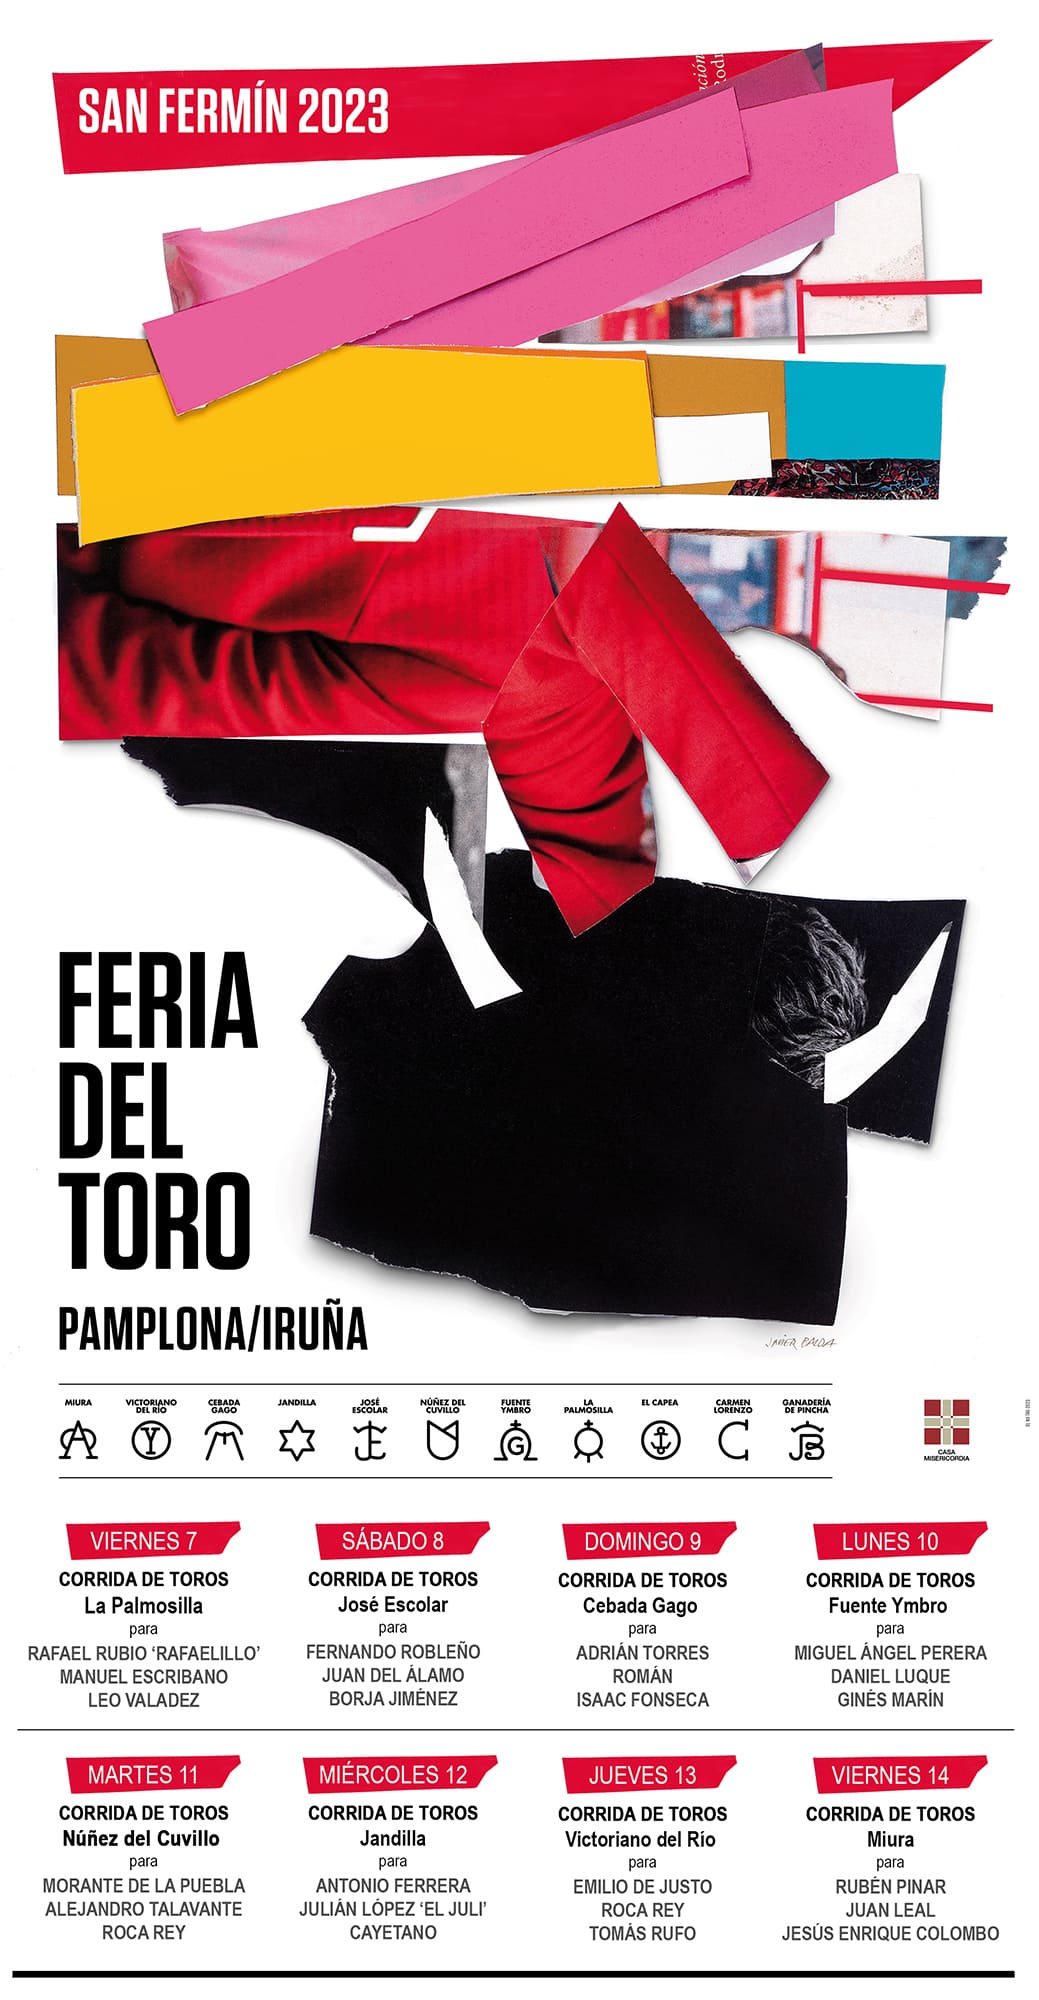 La Feria del Toro de Pamplona, en exclusiva en Mundotoro TV